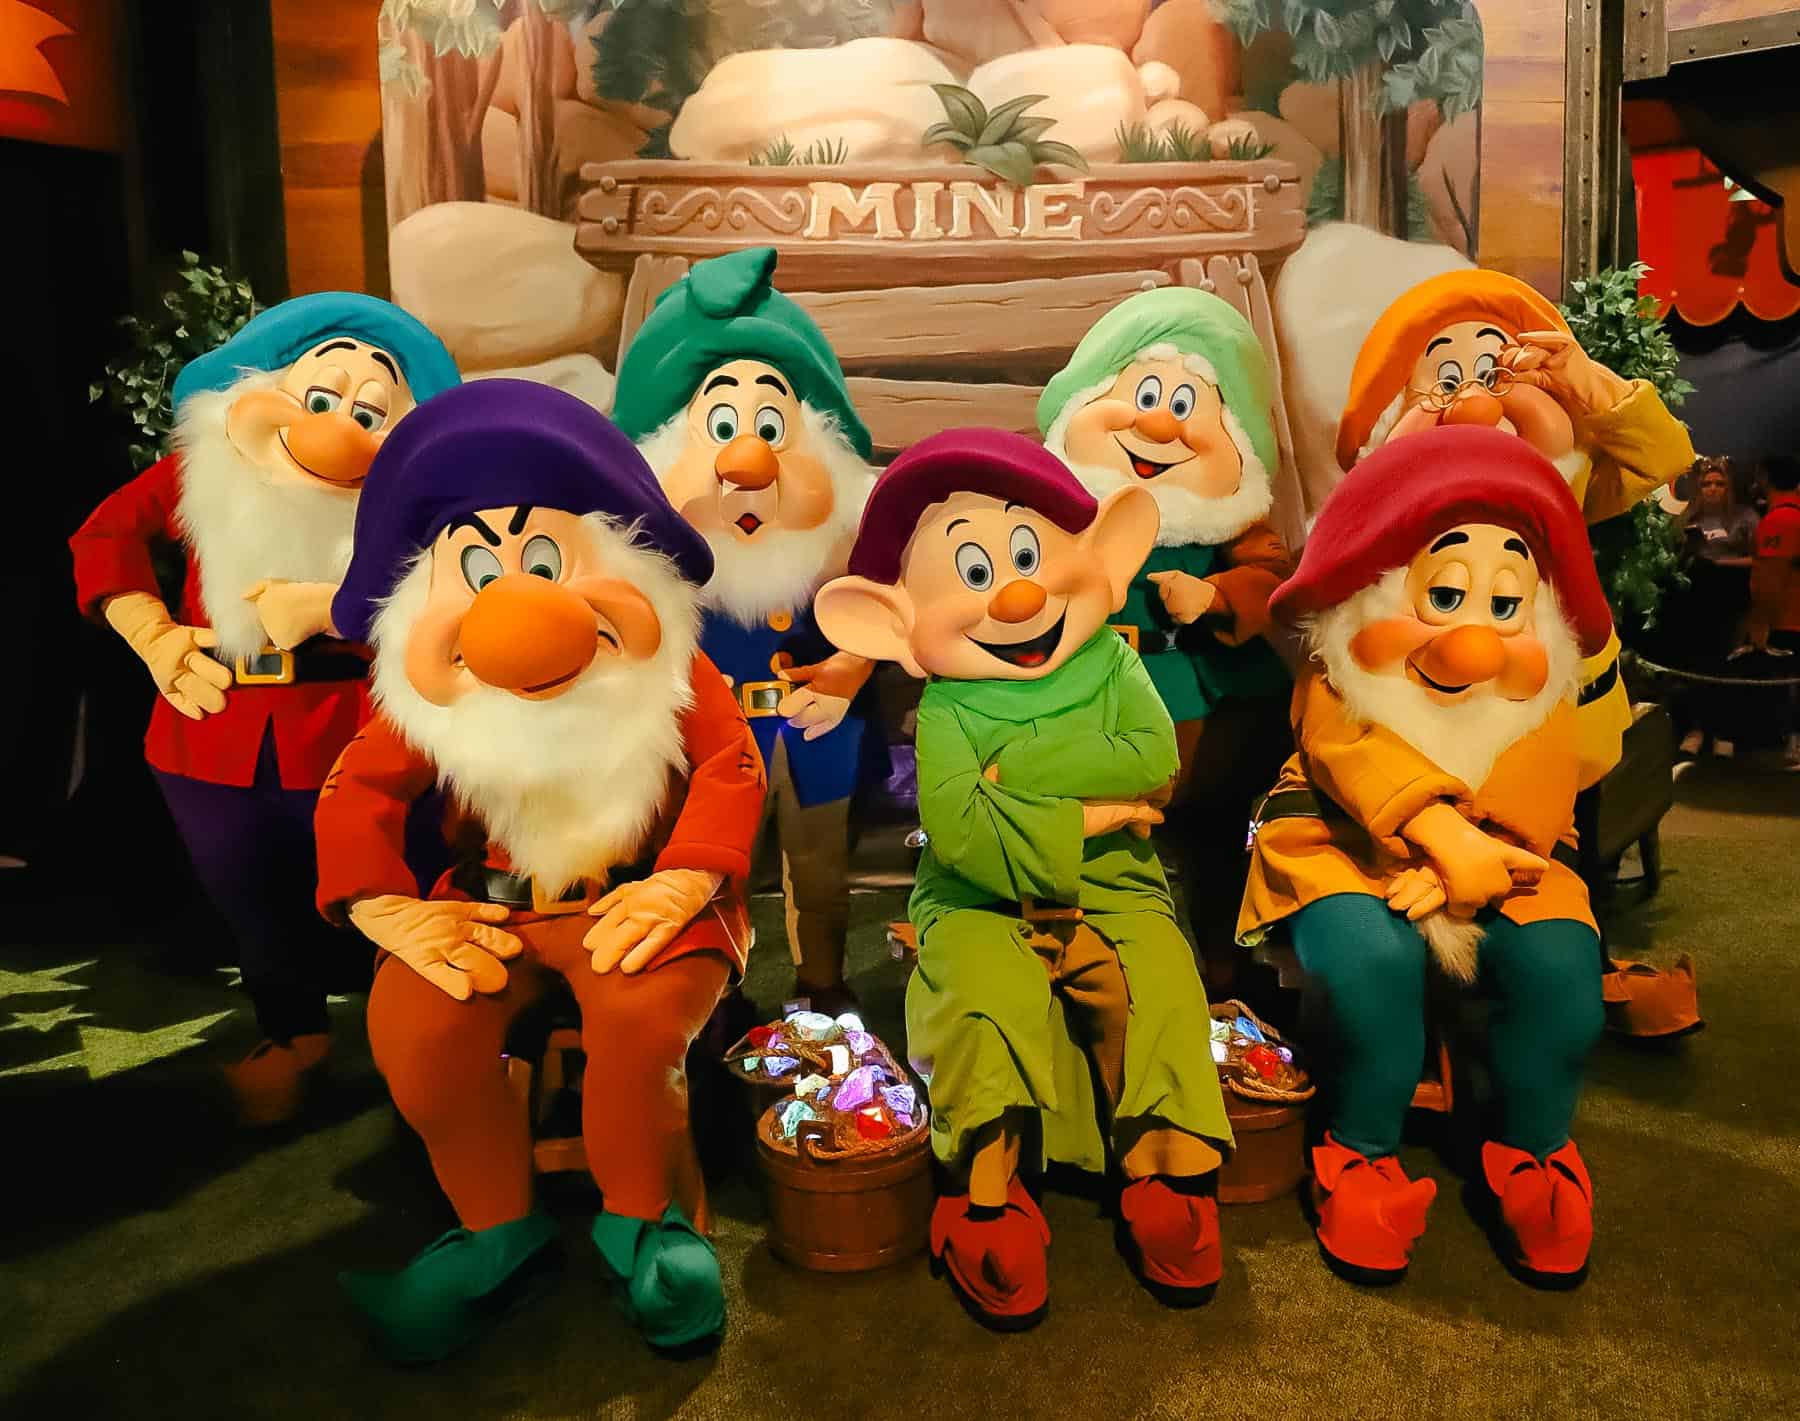 Seven Dwarfs character meet at the Disney Halloween Party